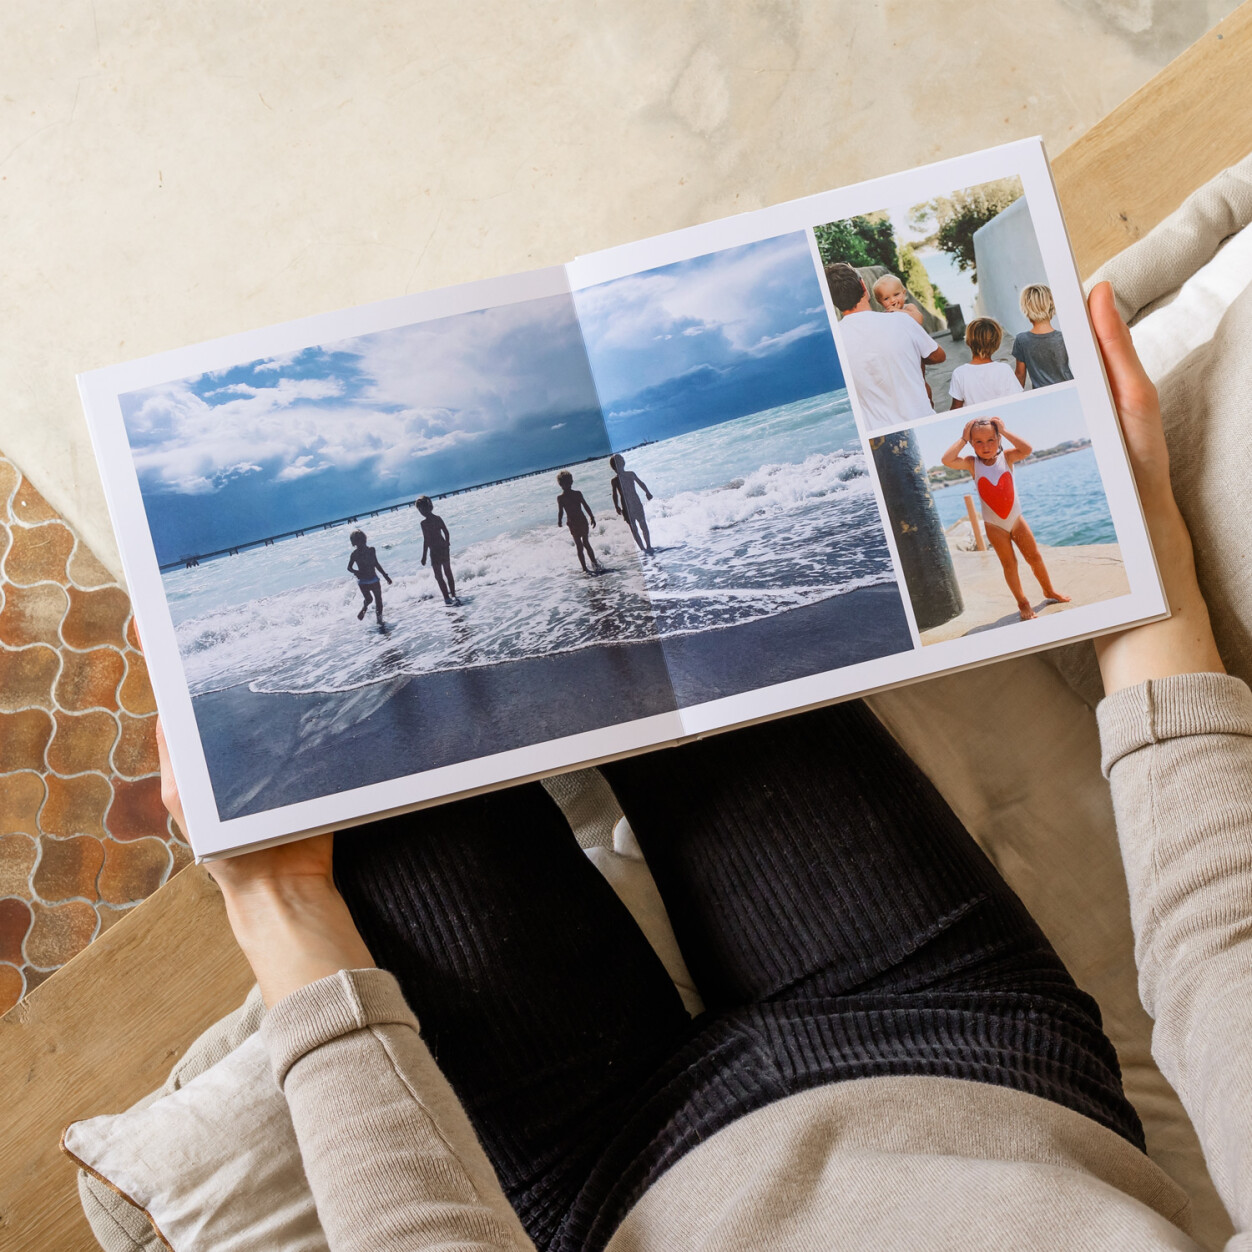 Create a travel photo book